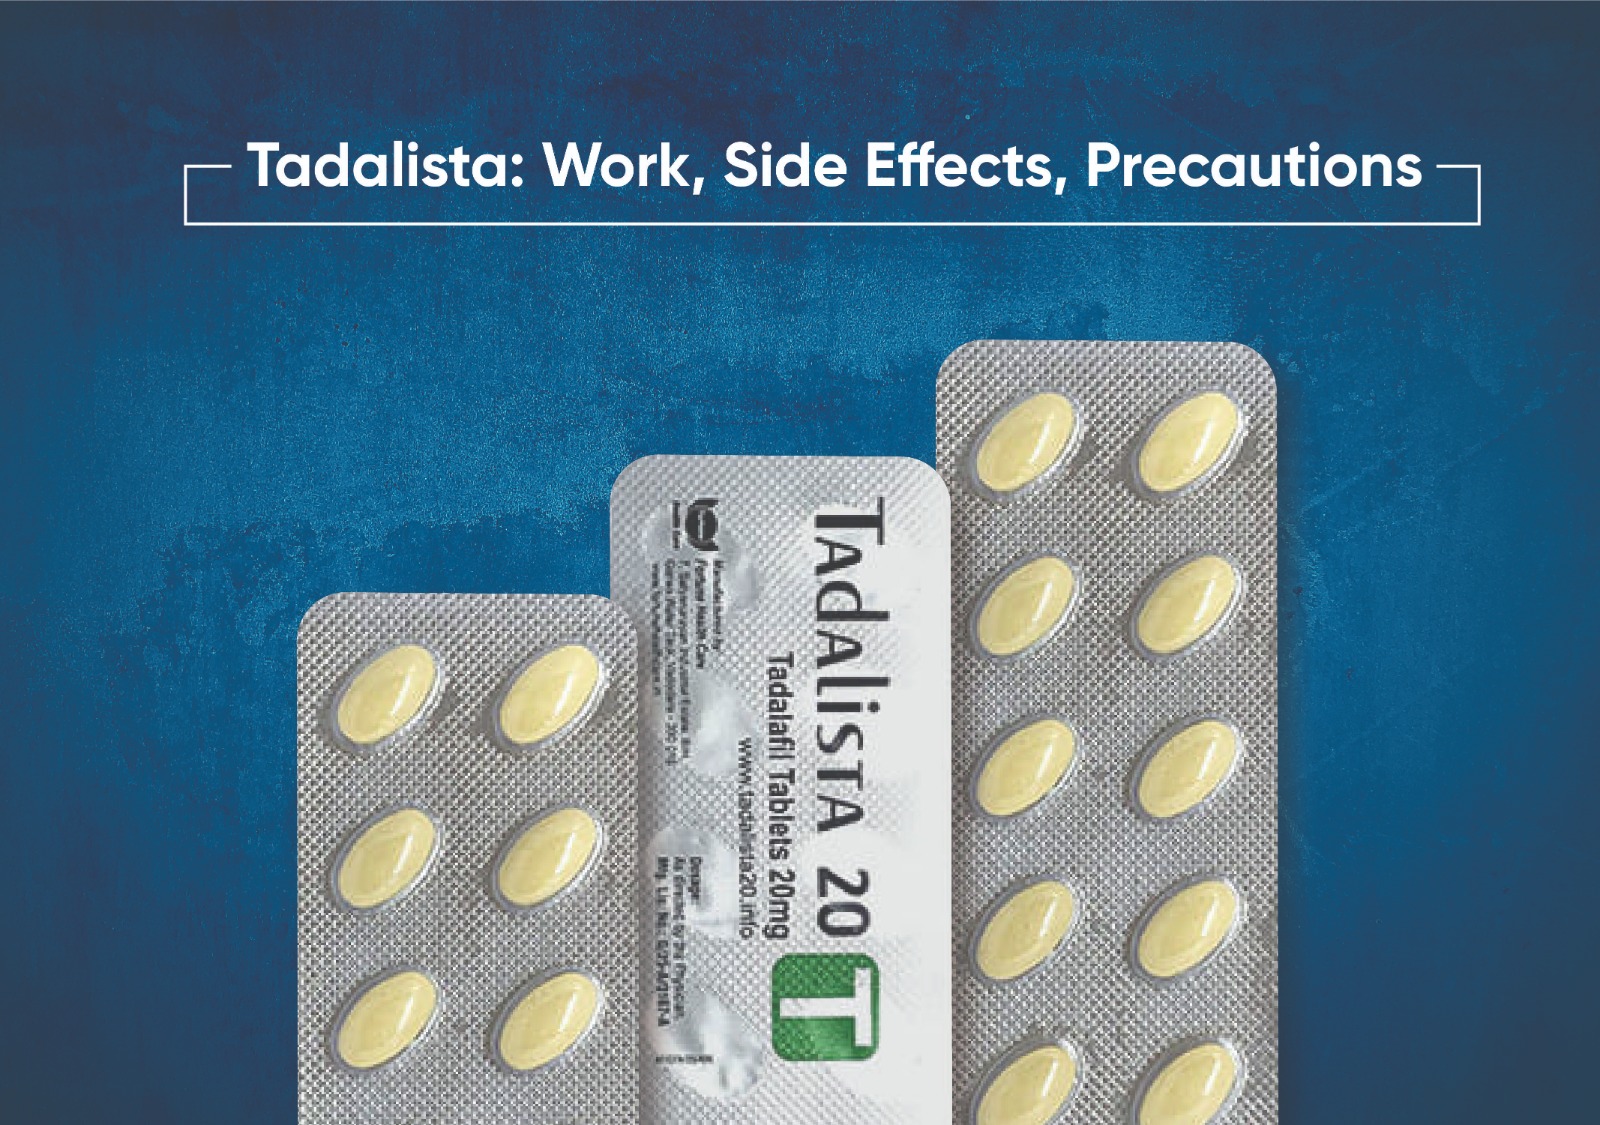 tadalista-work-side-effects-precautions